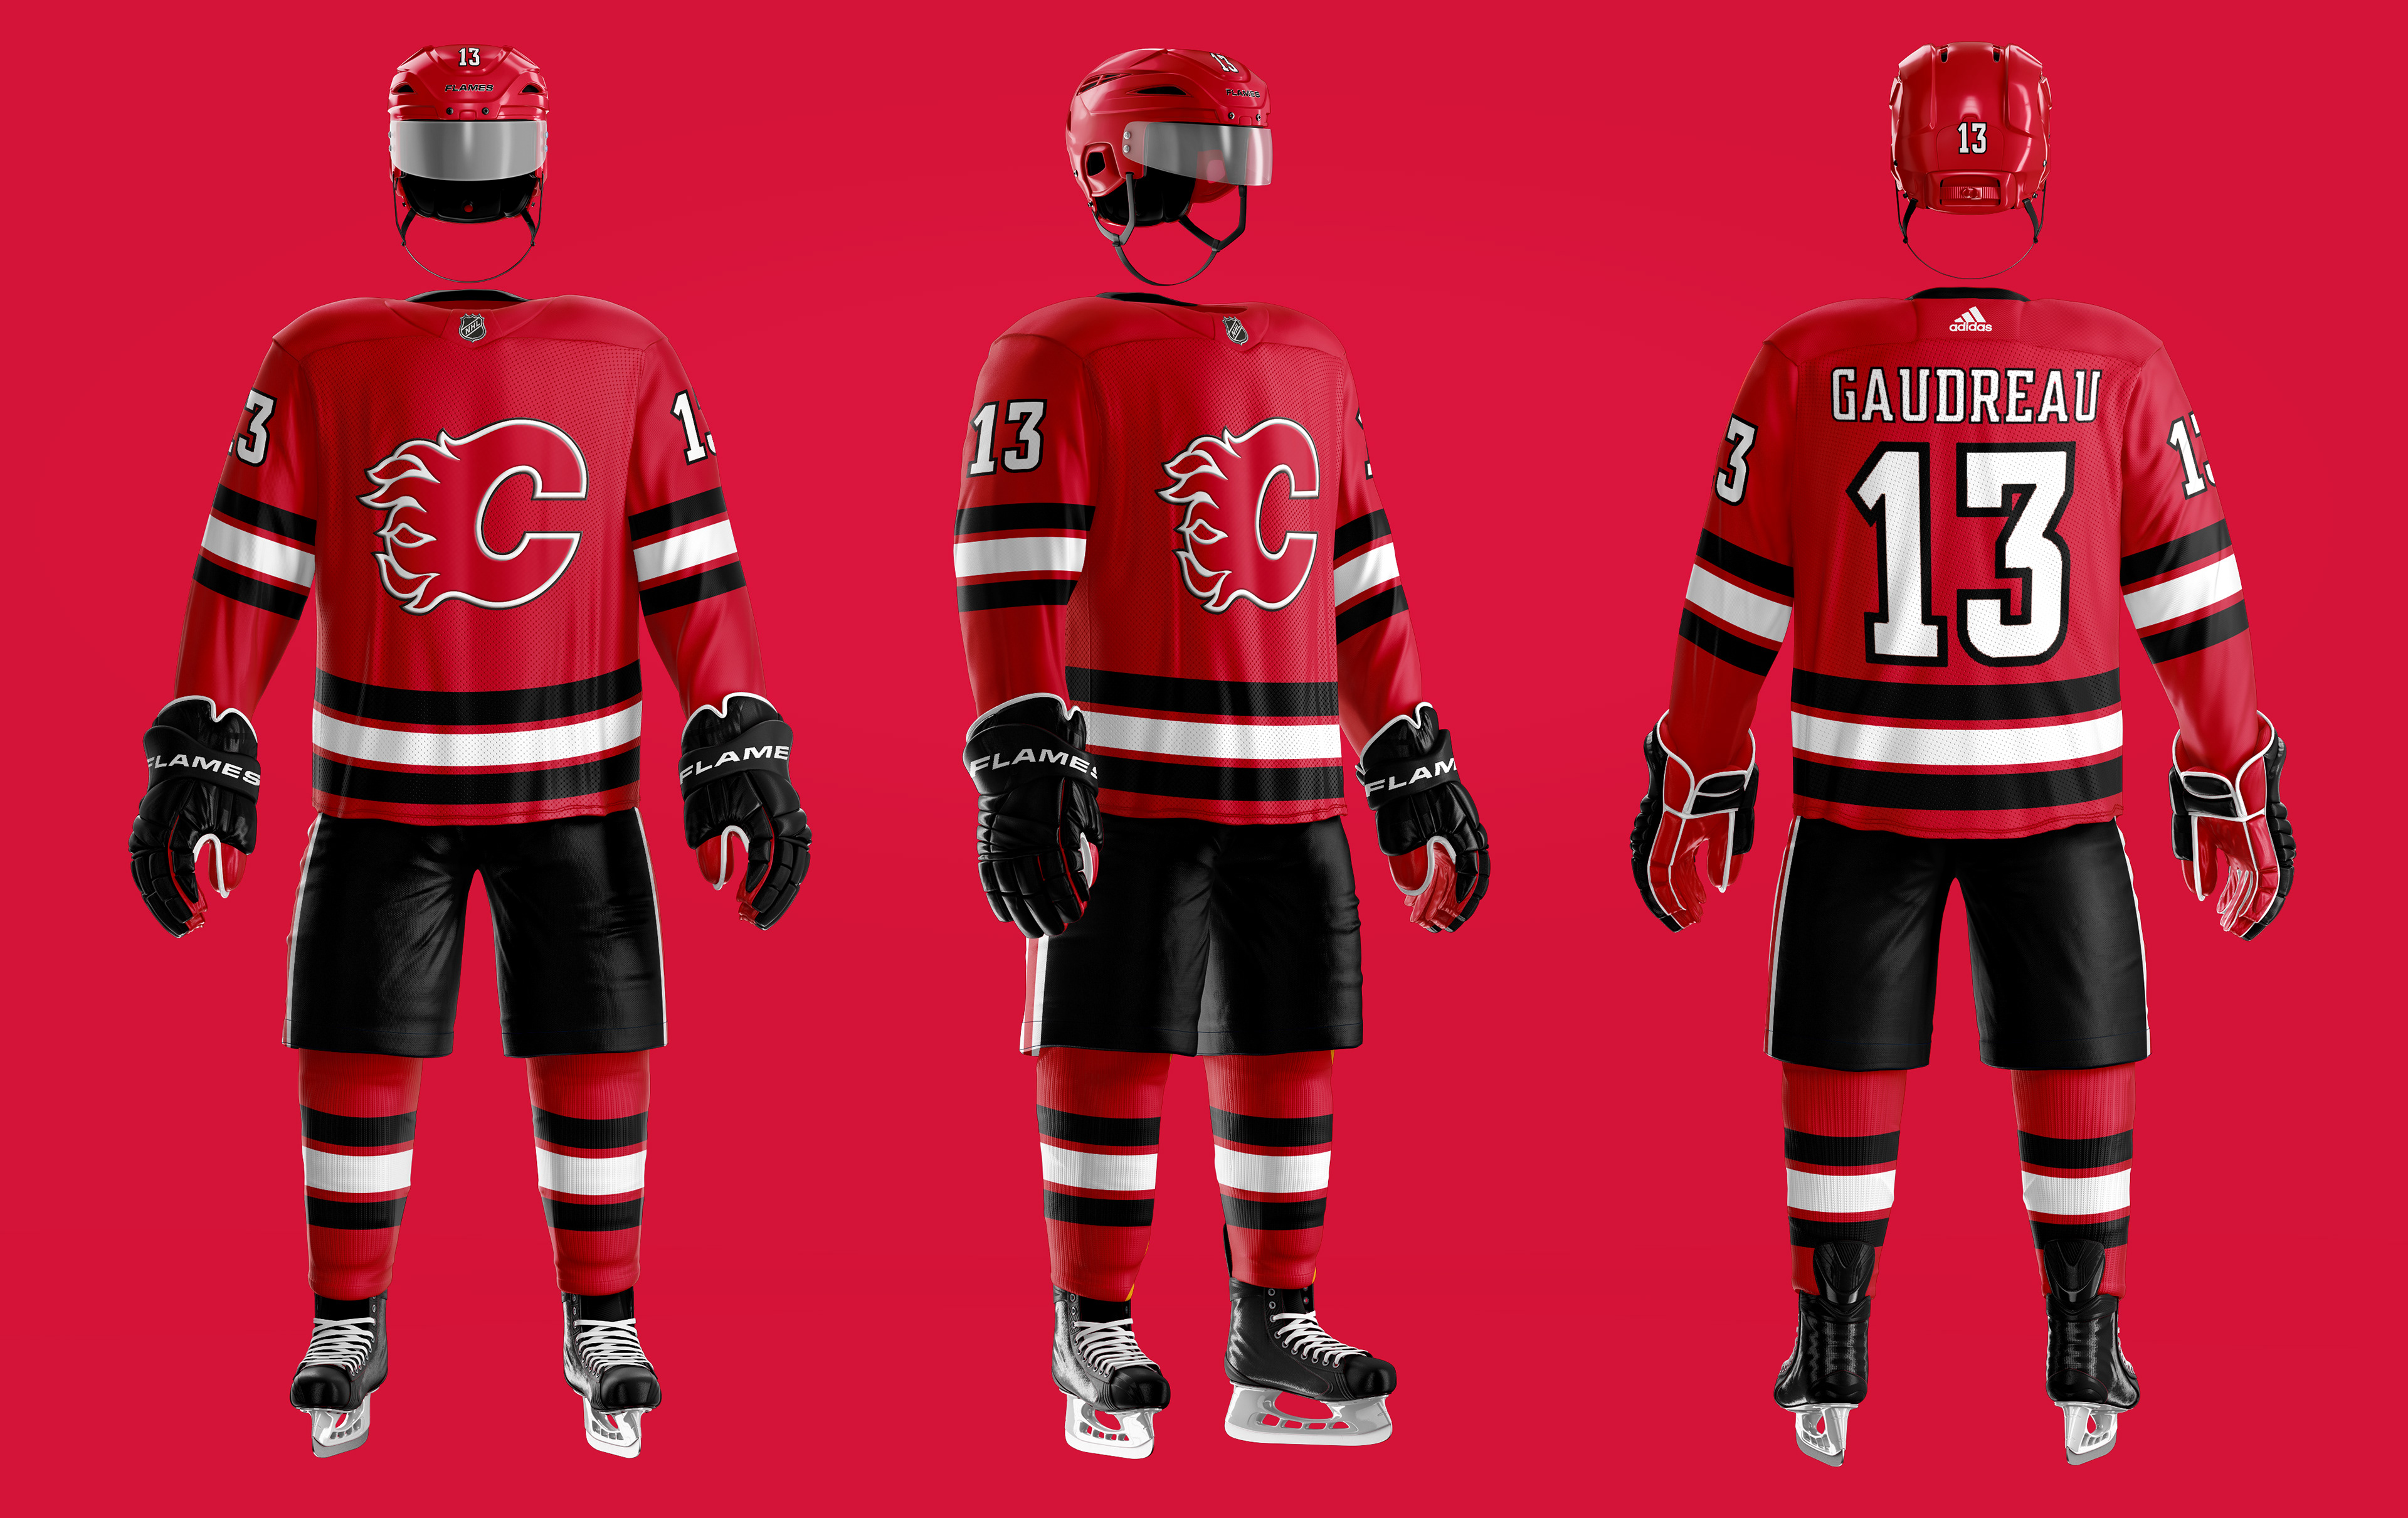 Designer Creats NHL/NFL Uniform Mashups For Every Hockey Team - Daily Snark